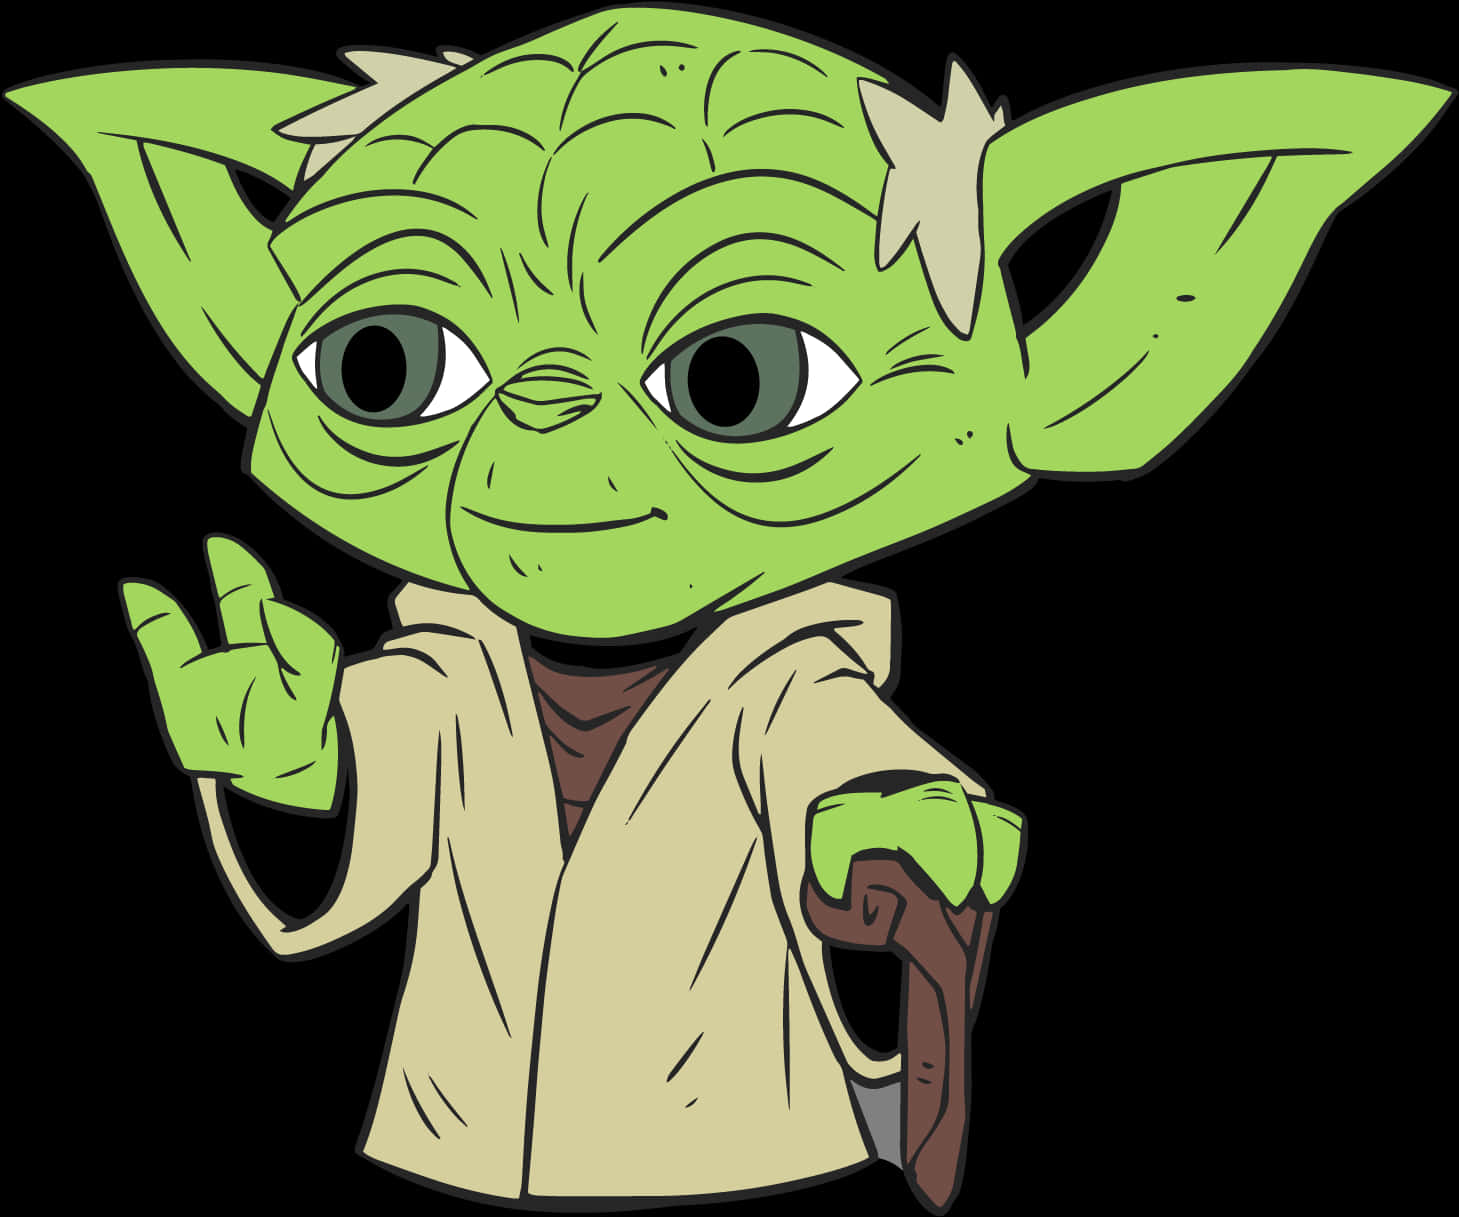 Master Yoda Cartoon Illustration